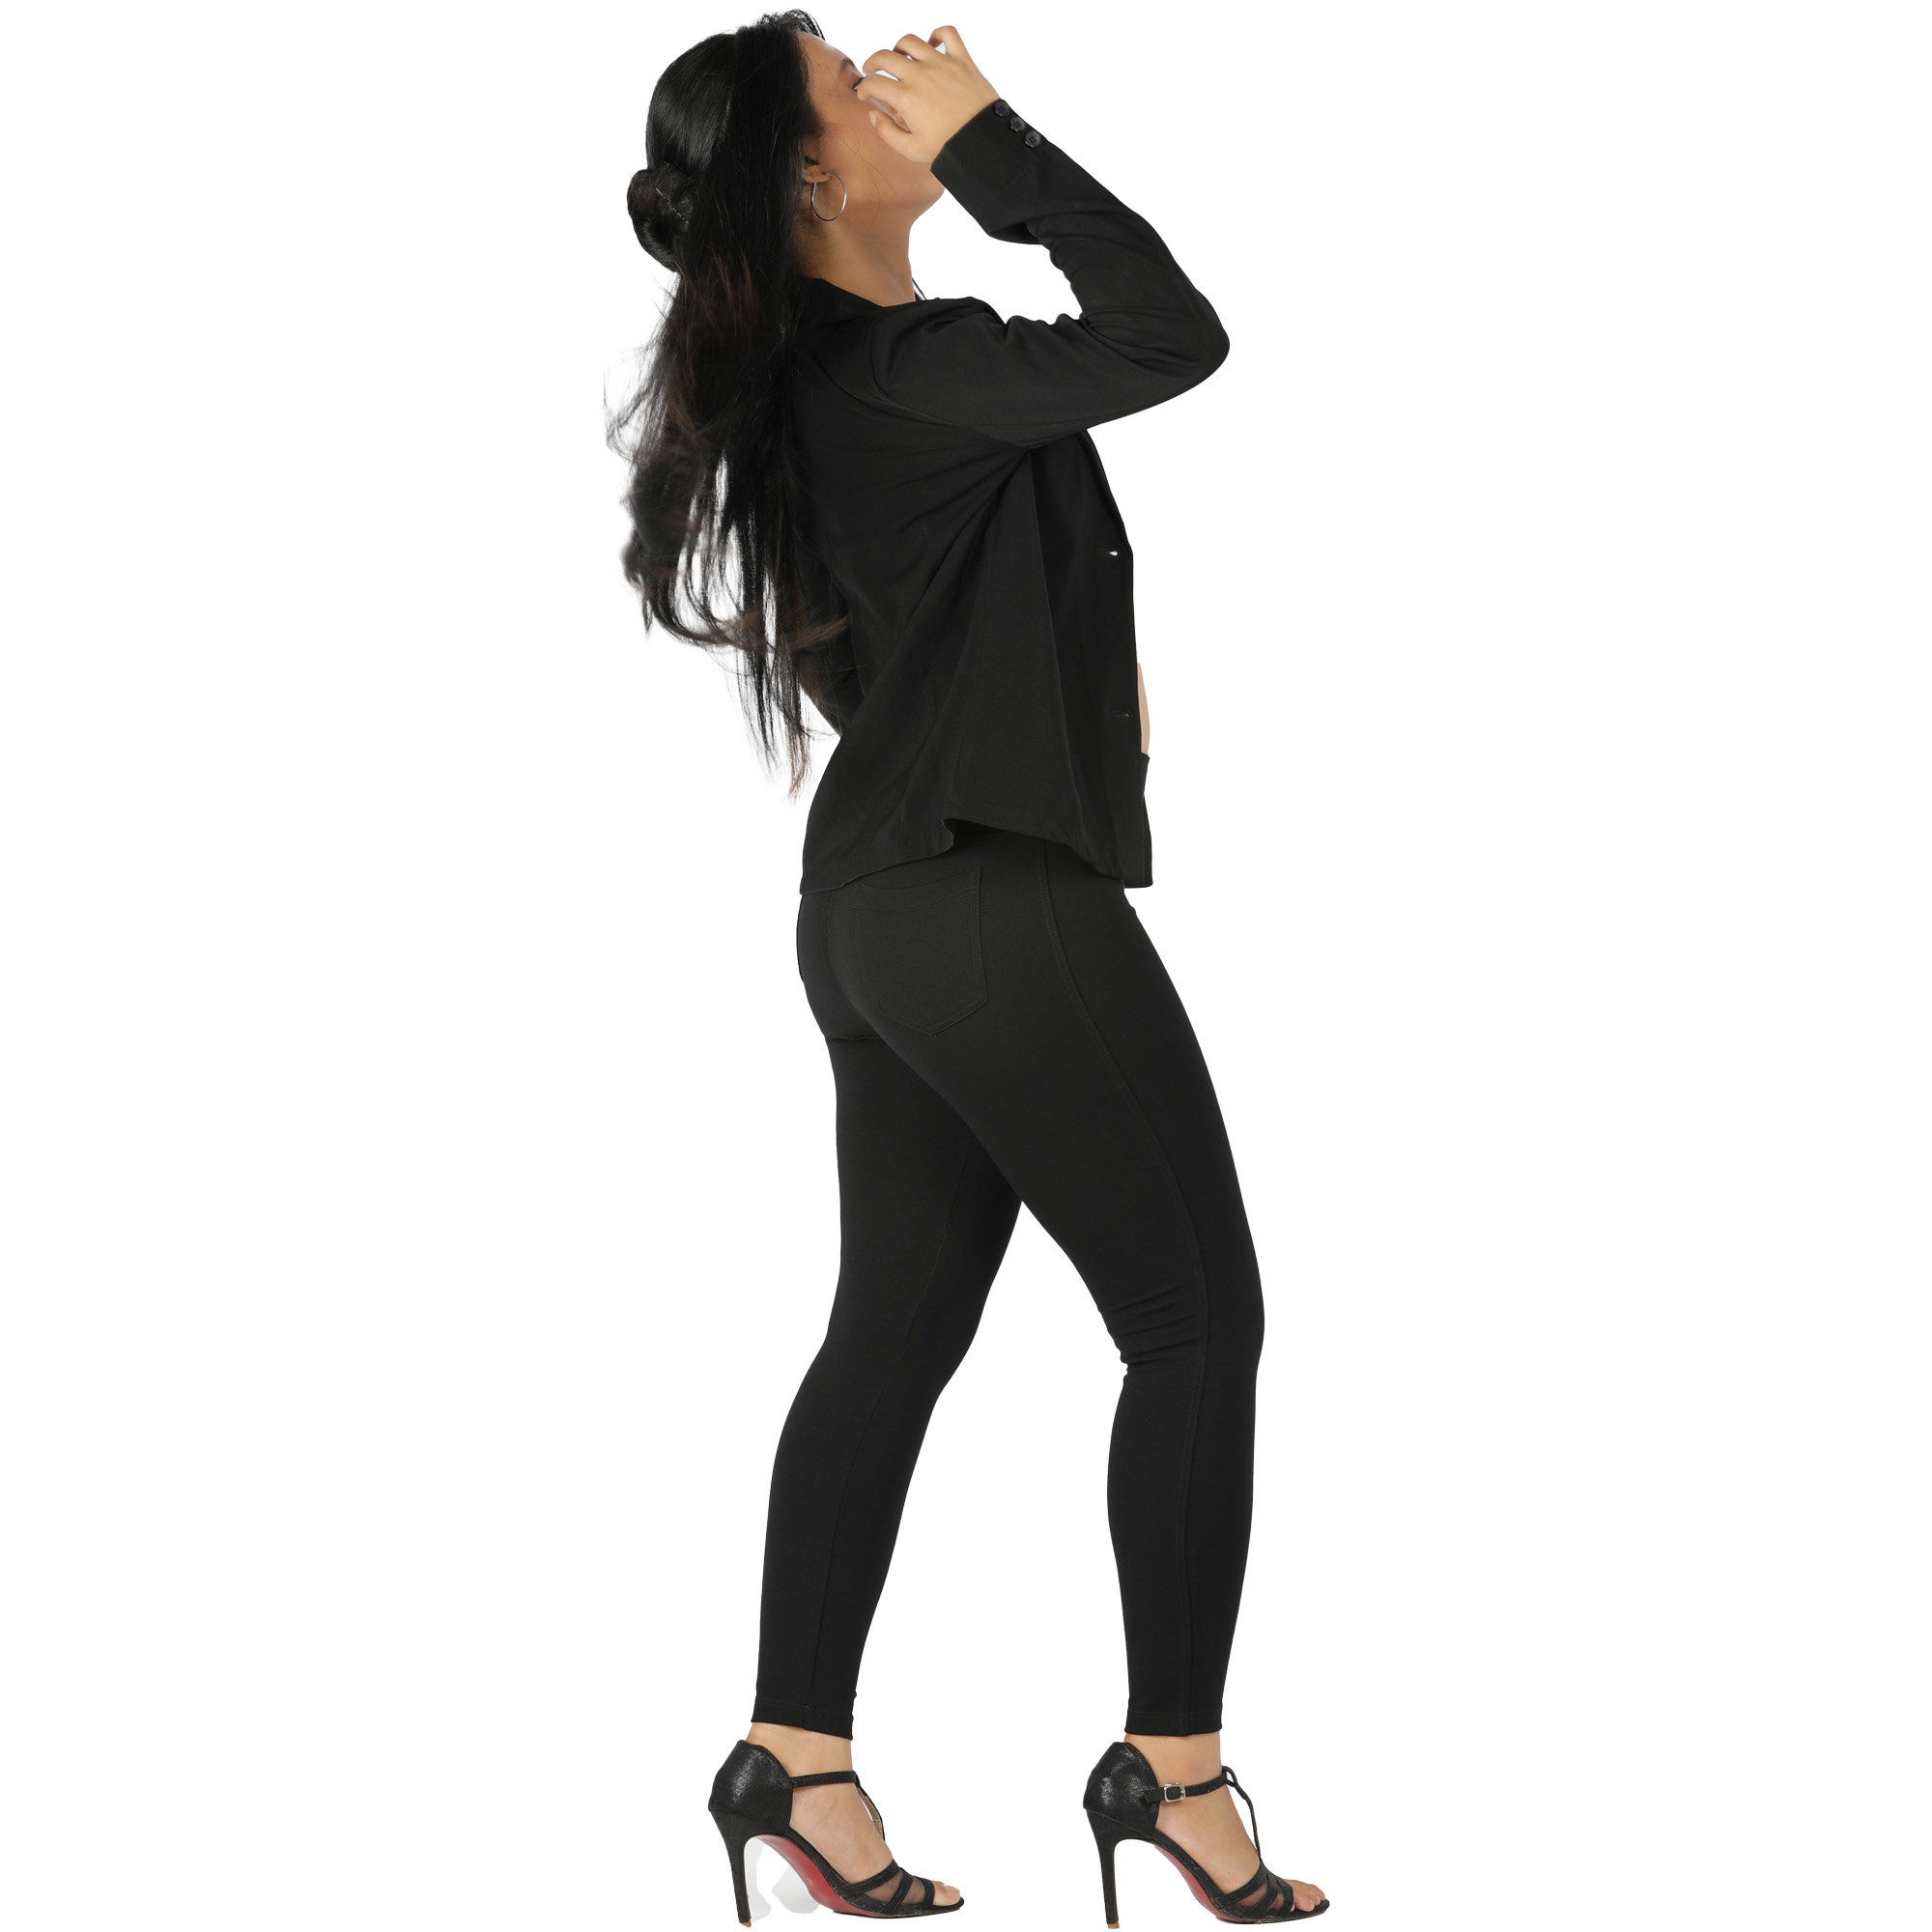 Black jegging women Plus size compression pant 2 back pockets - Belore Slims